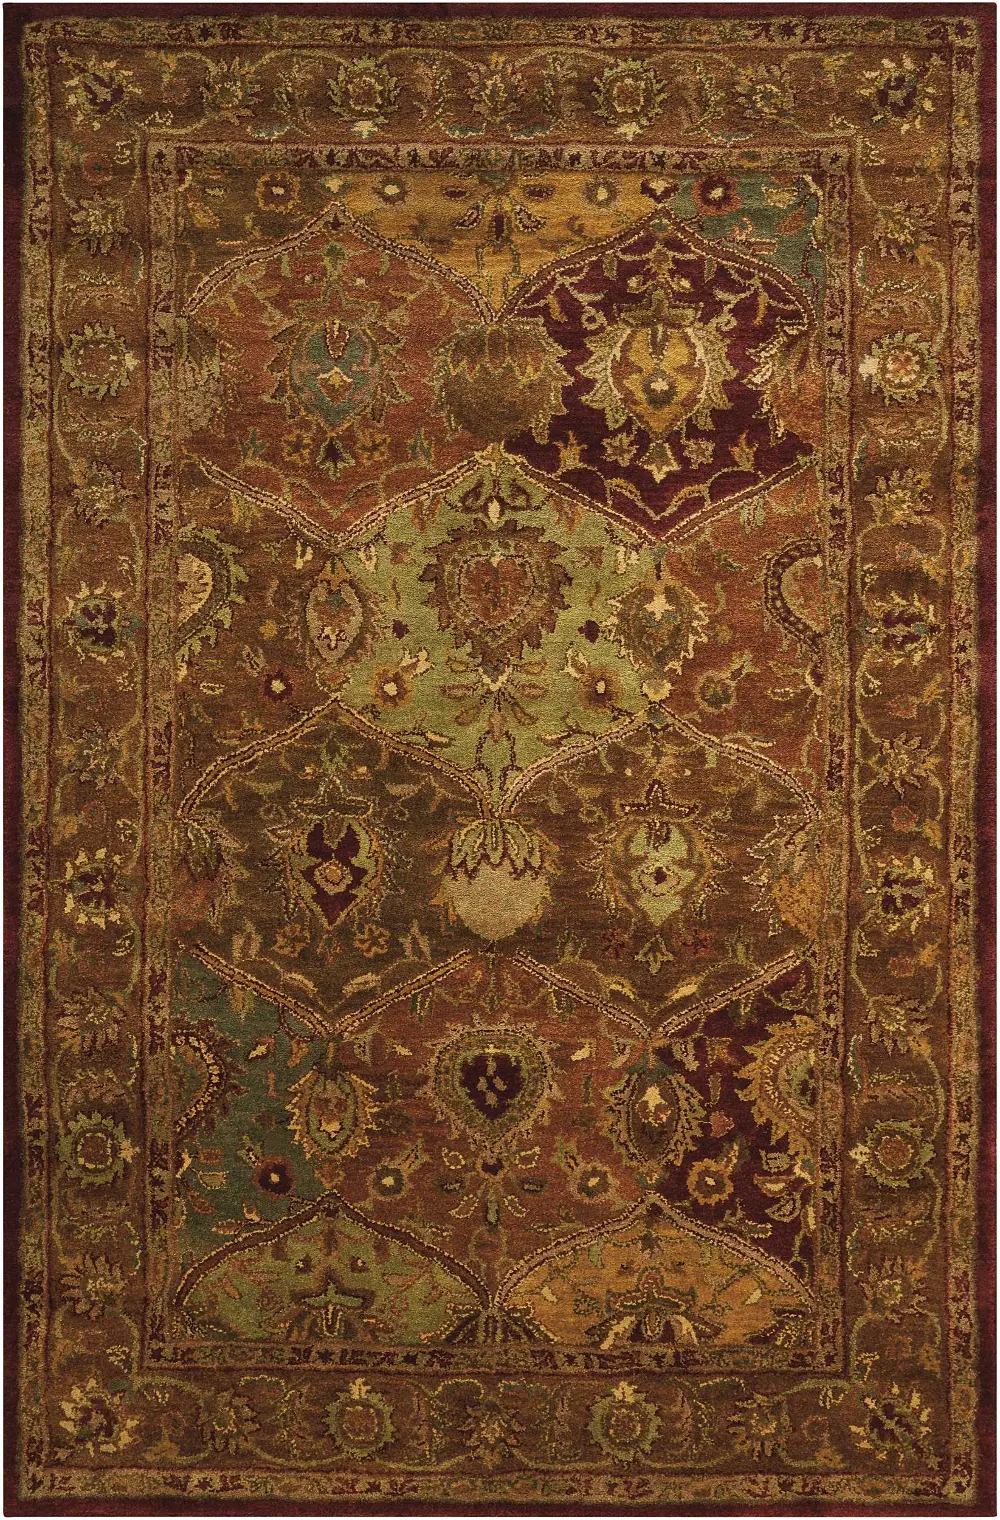 8 x 11 Large Beige Persian-Style Area Rug - Jaipur-1